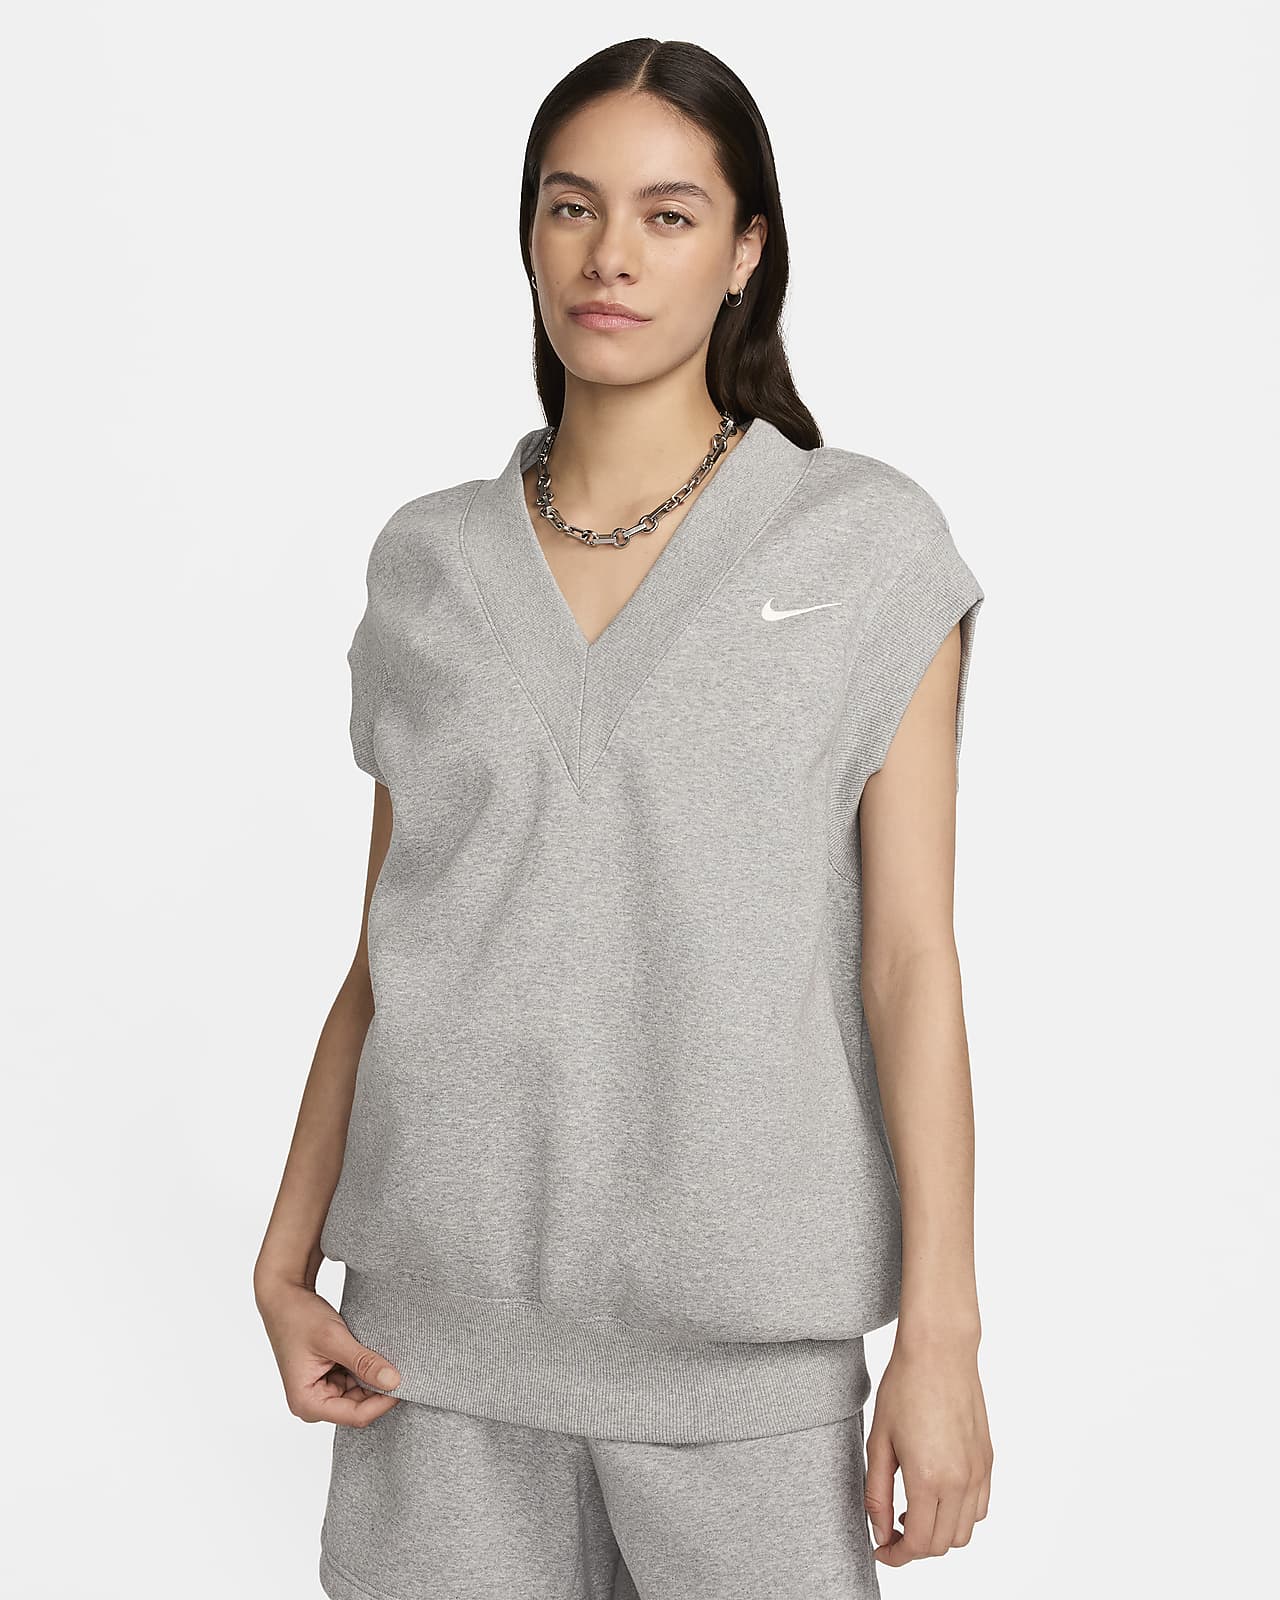 Overdimensioneret Nike Sportswear Phoenix Fleece-vest til kvinder